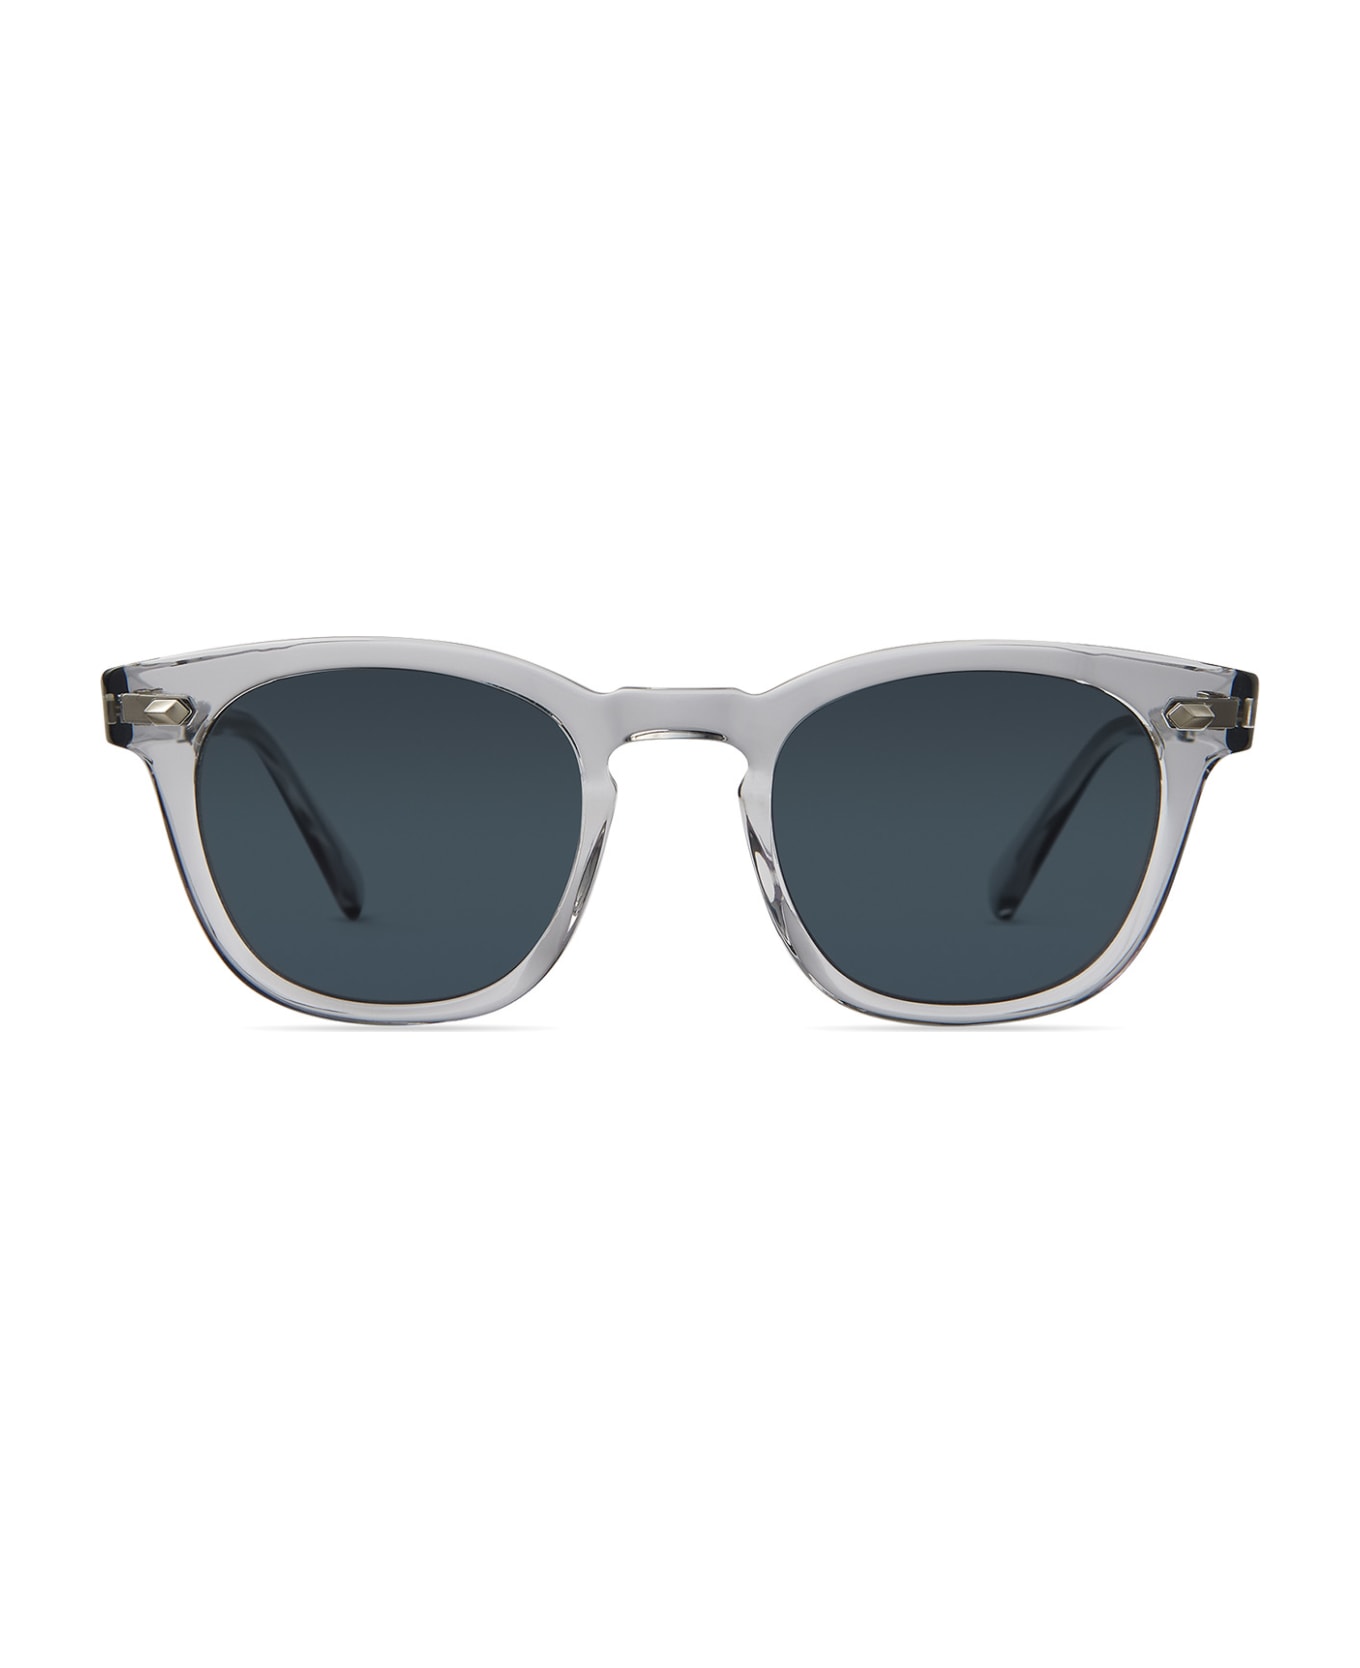 Mr. Leight Hanalei S Greystone-platinum Sunglasses - Greystone-Platinum